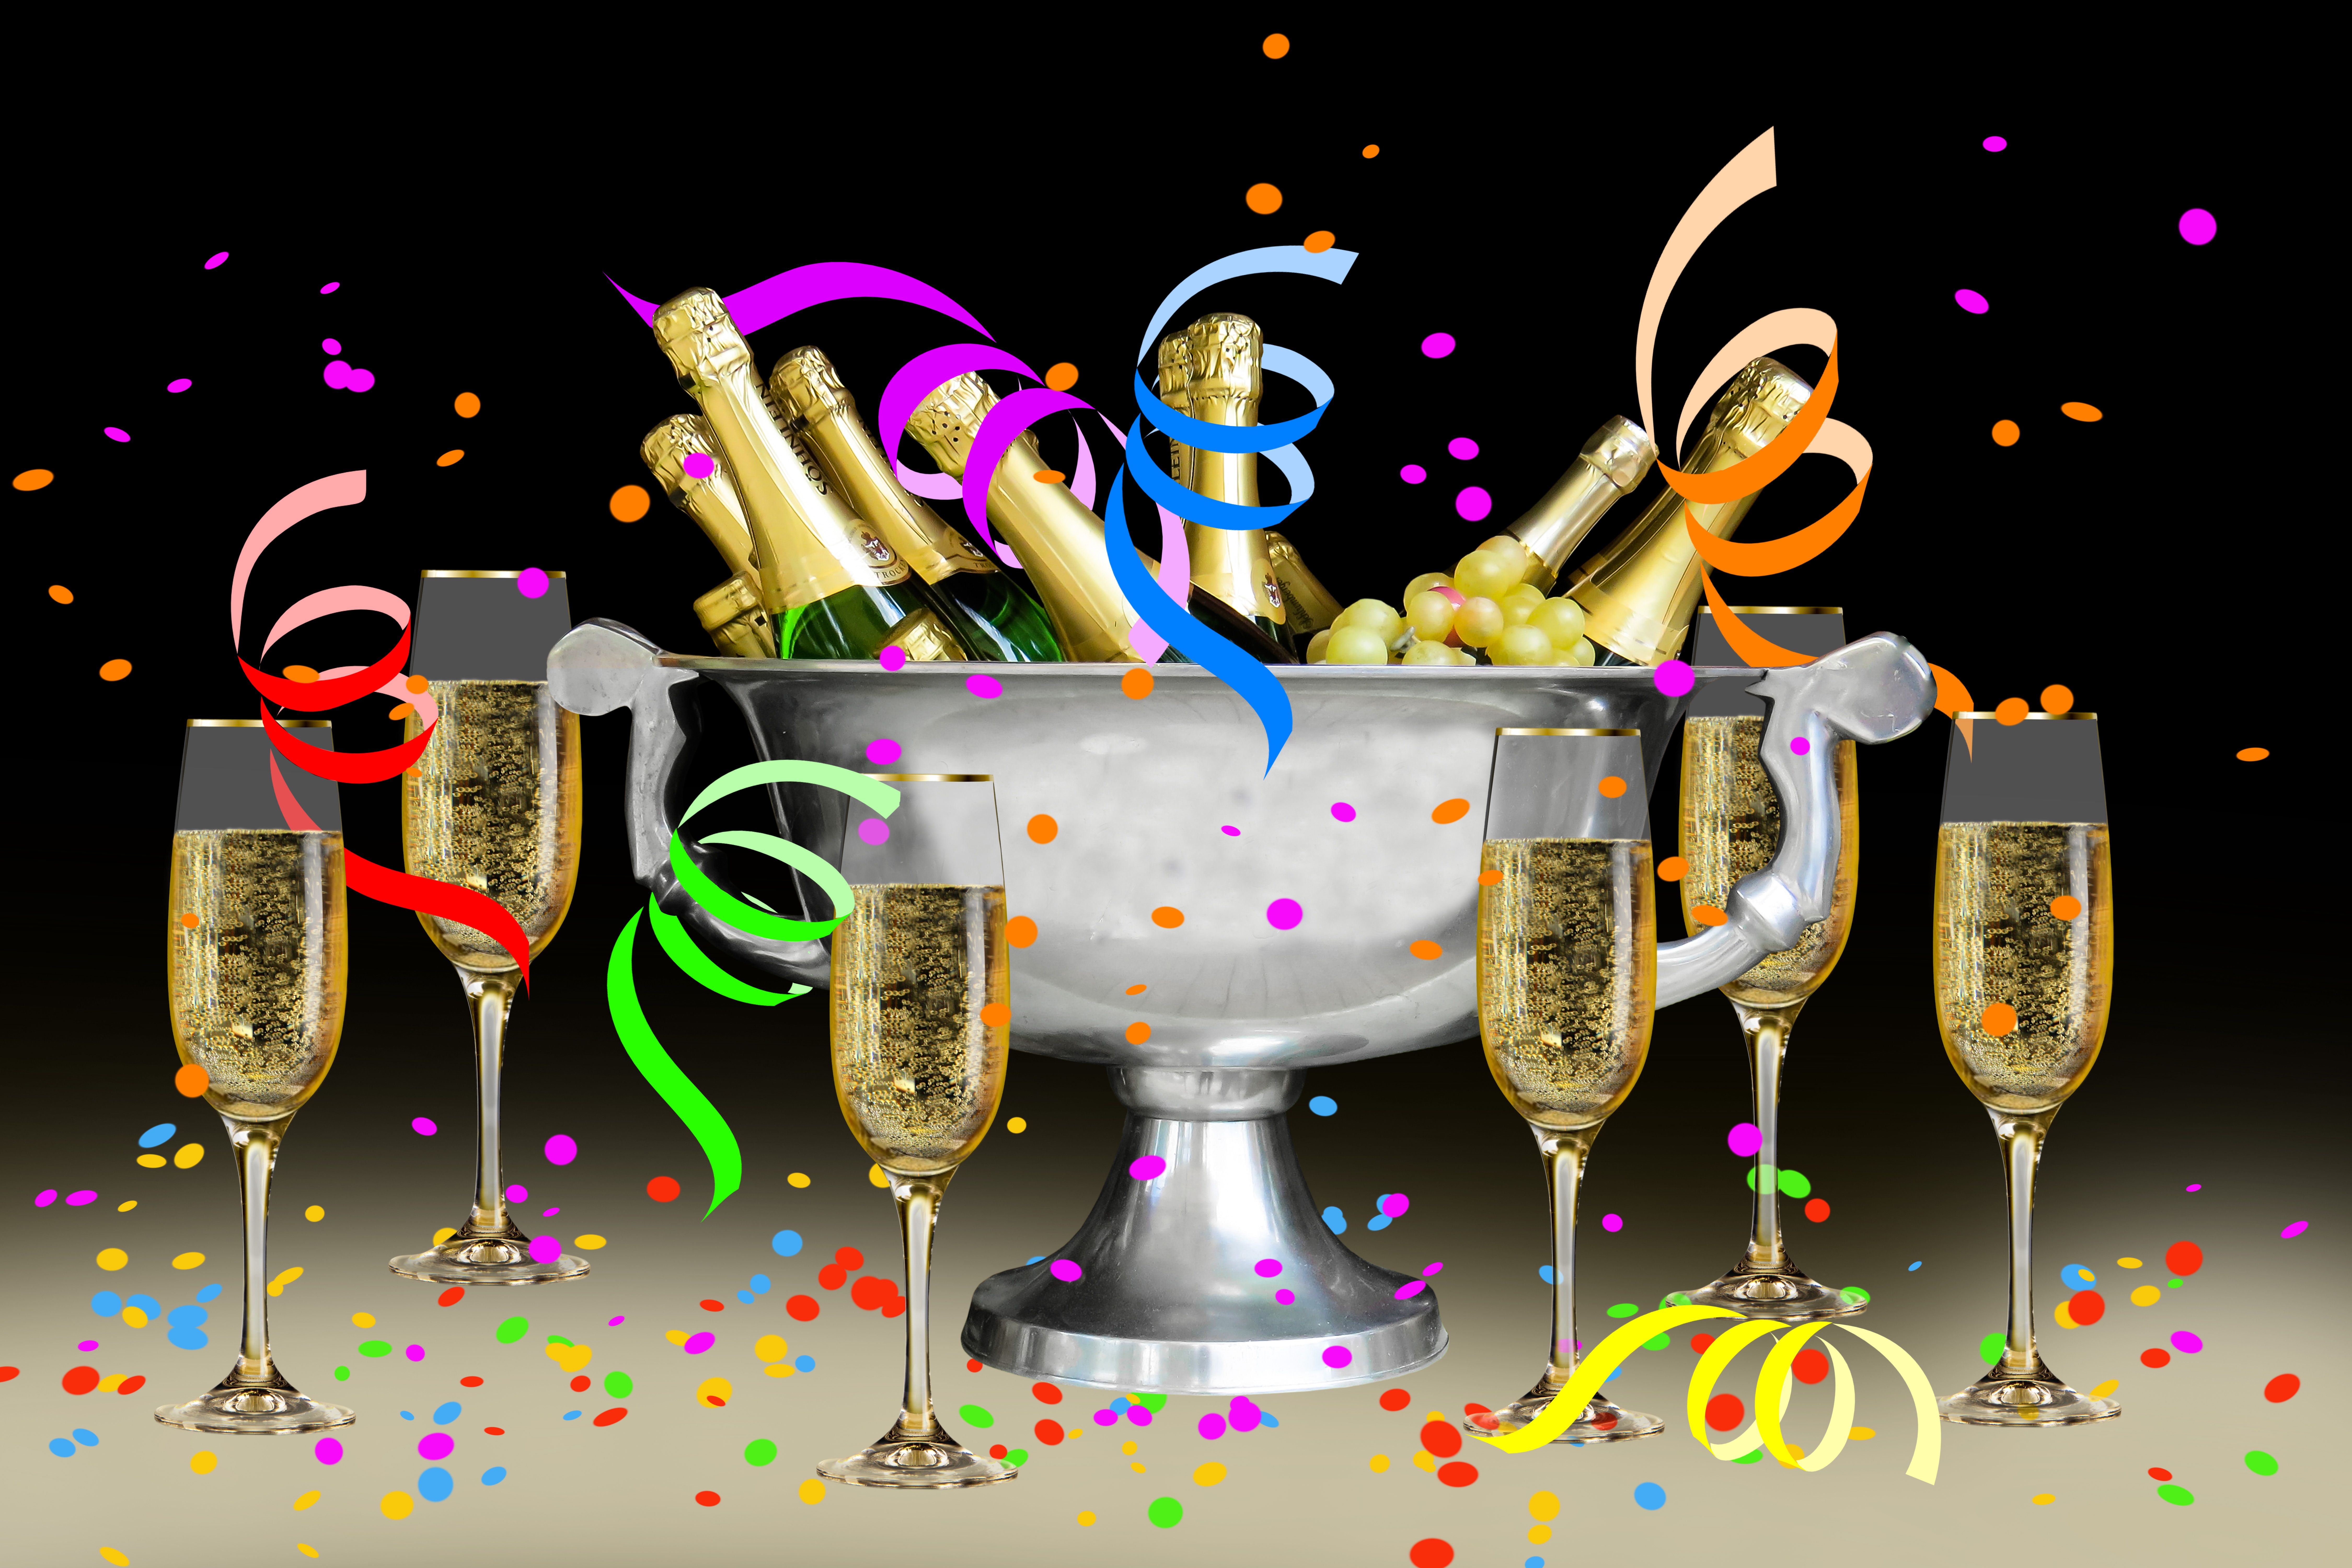 glass-celebration-carnival-drink-bottle-bucket-celebrate-cheers-confetti-festival-illustration-party-champagne-birthday-greeting-card-birthday-card-cartoon-prost-champagne-glasses-streamer-birthday-party-paper-snakes-champagne-cooler-champagne-glass-bottle-of-sparkling-wine-champagne-bucket-1199997.jpg